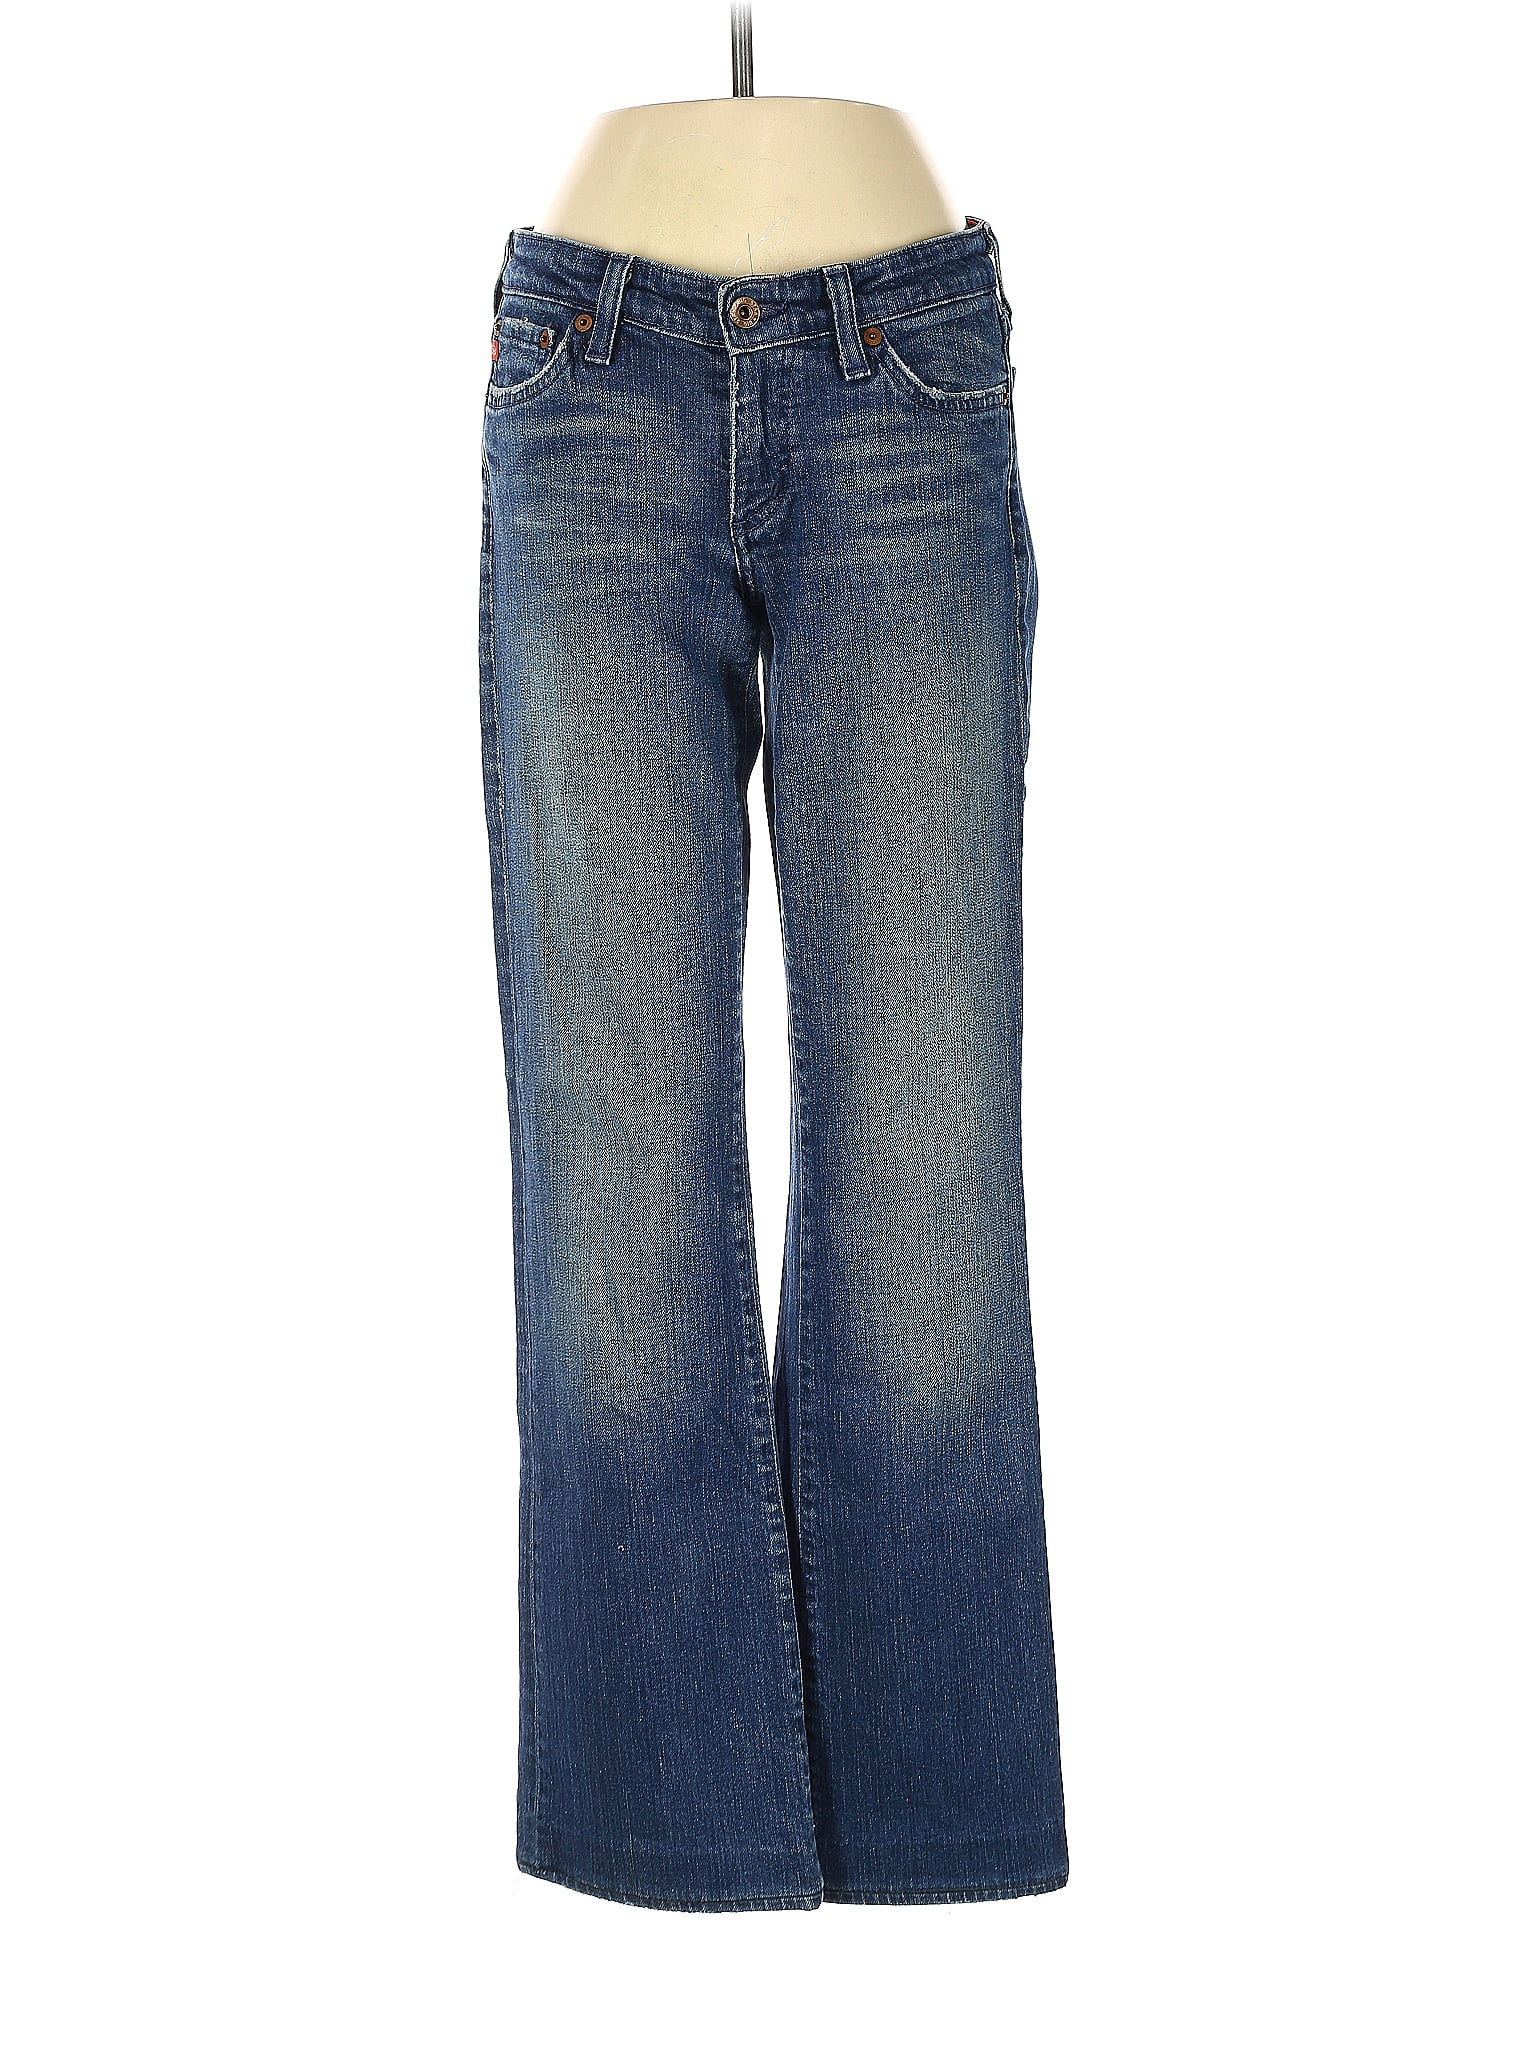 Big Star Solid Blue Jeans 25 Waist - 76% off